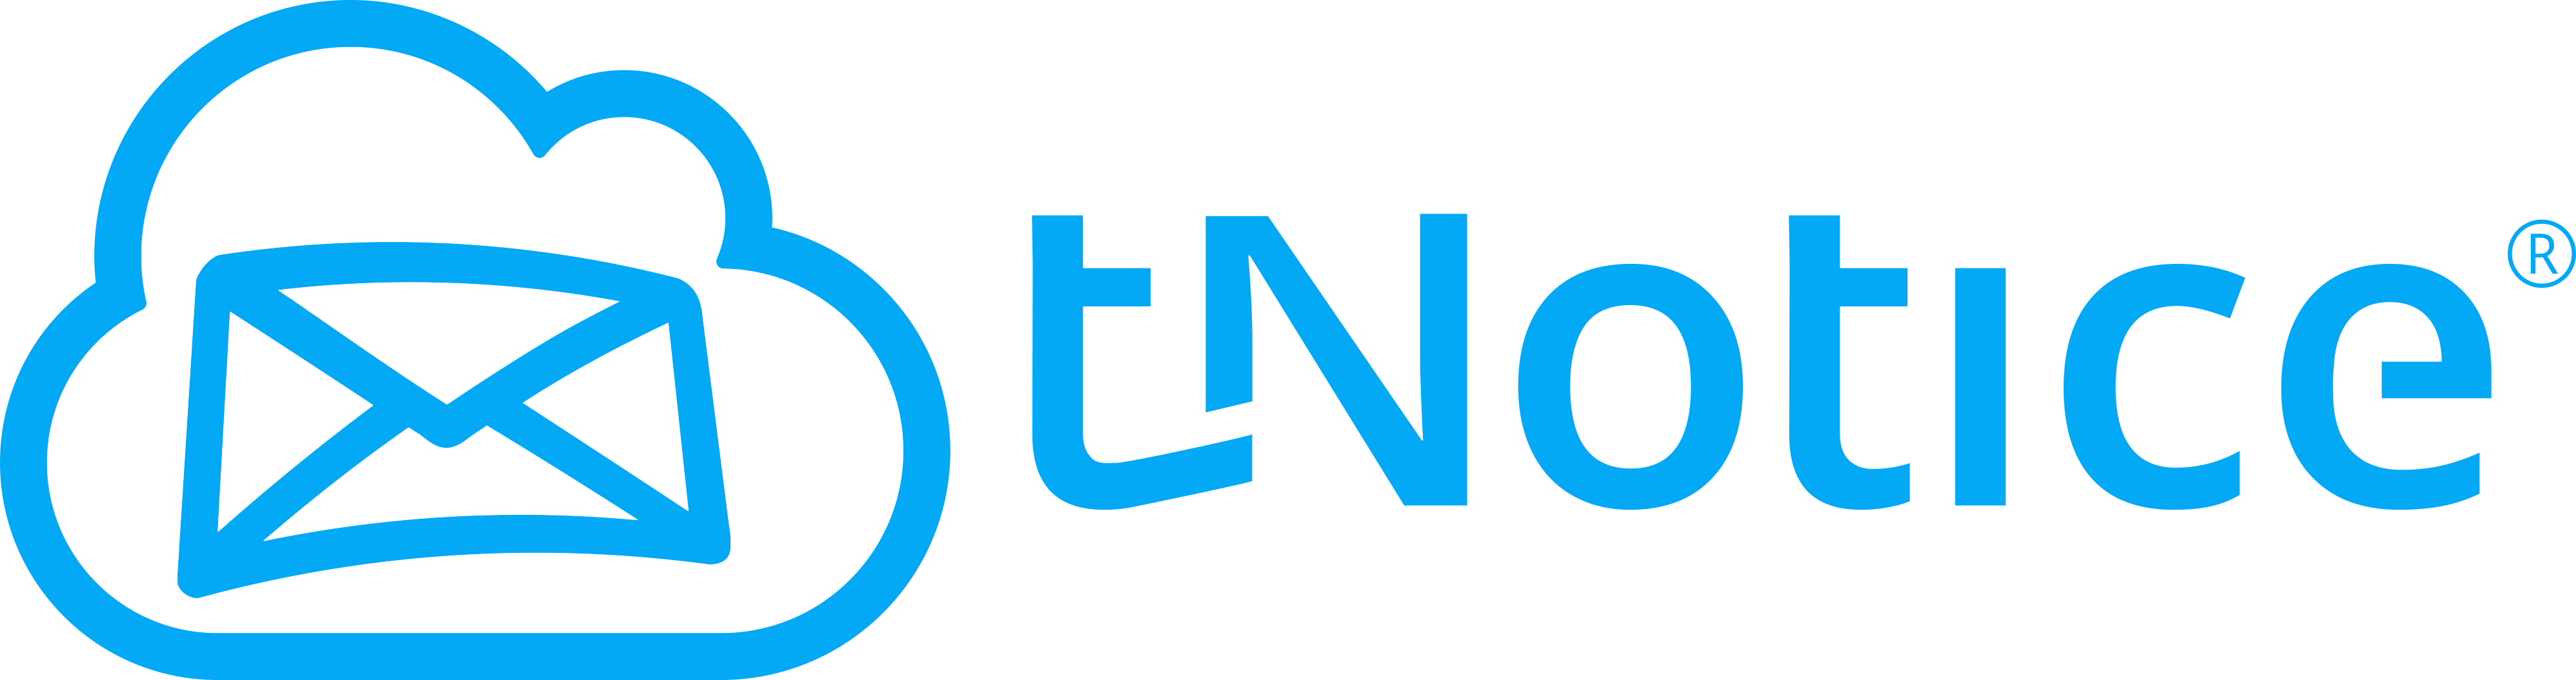 logo tnotice